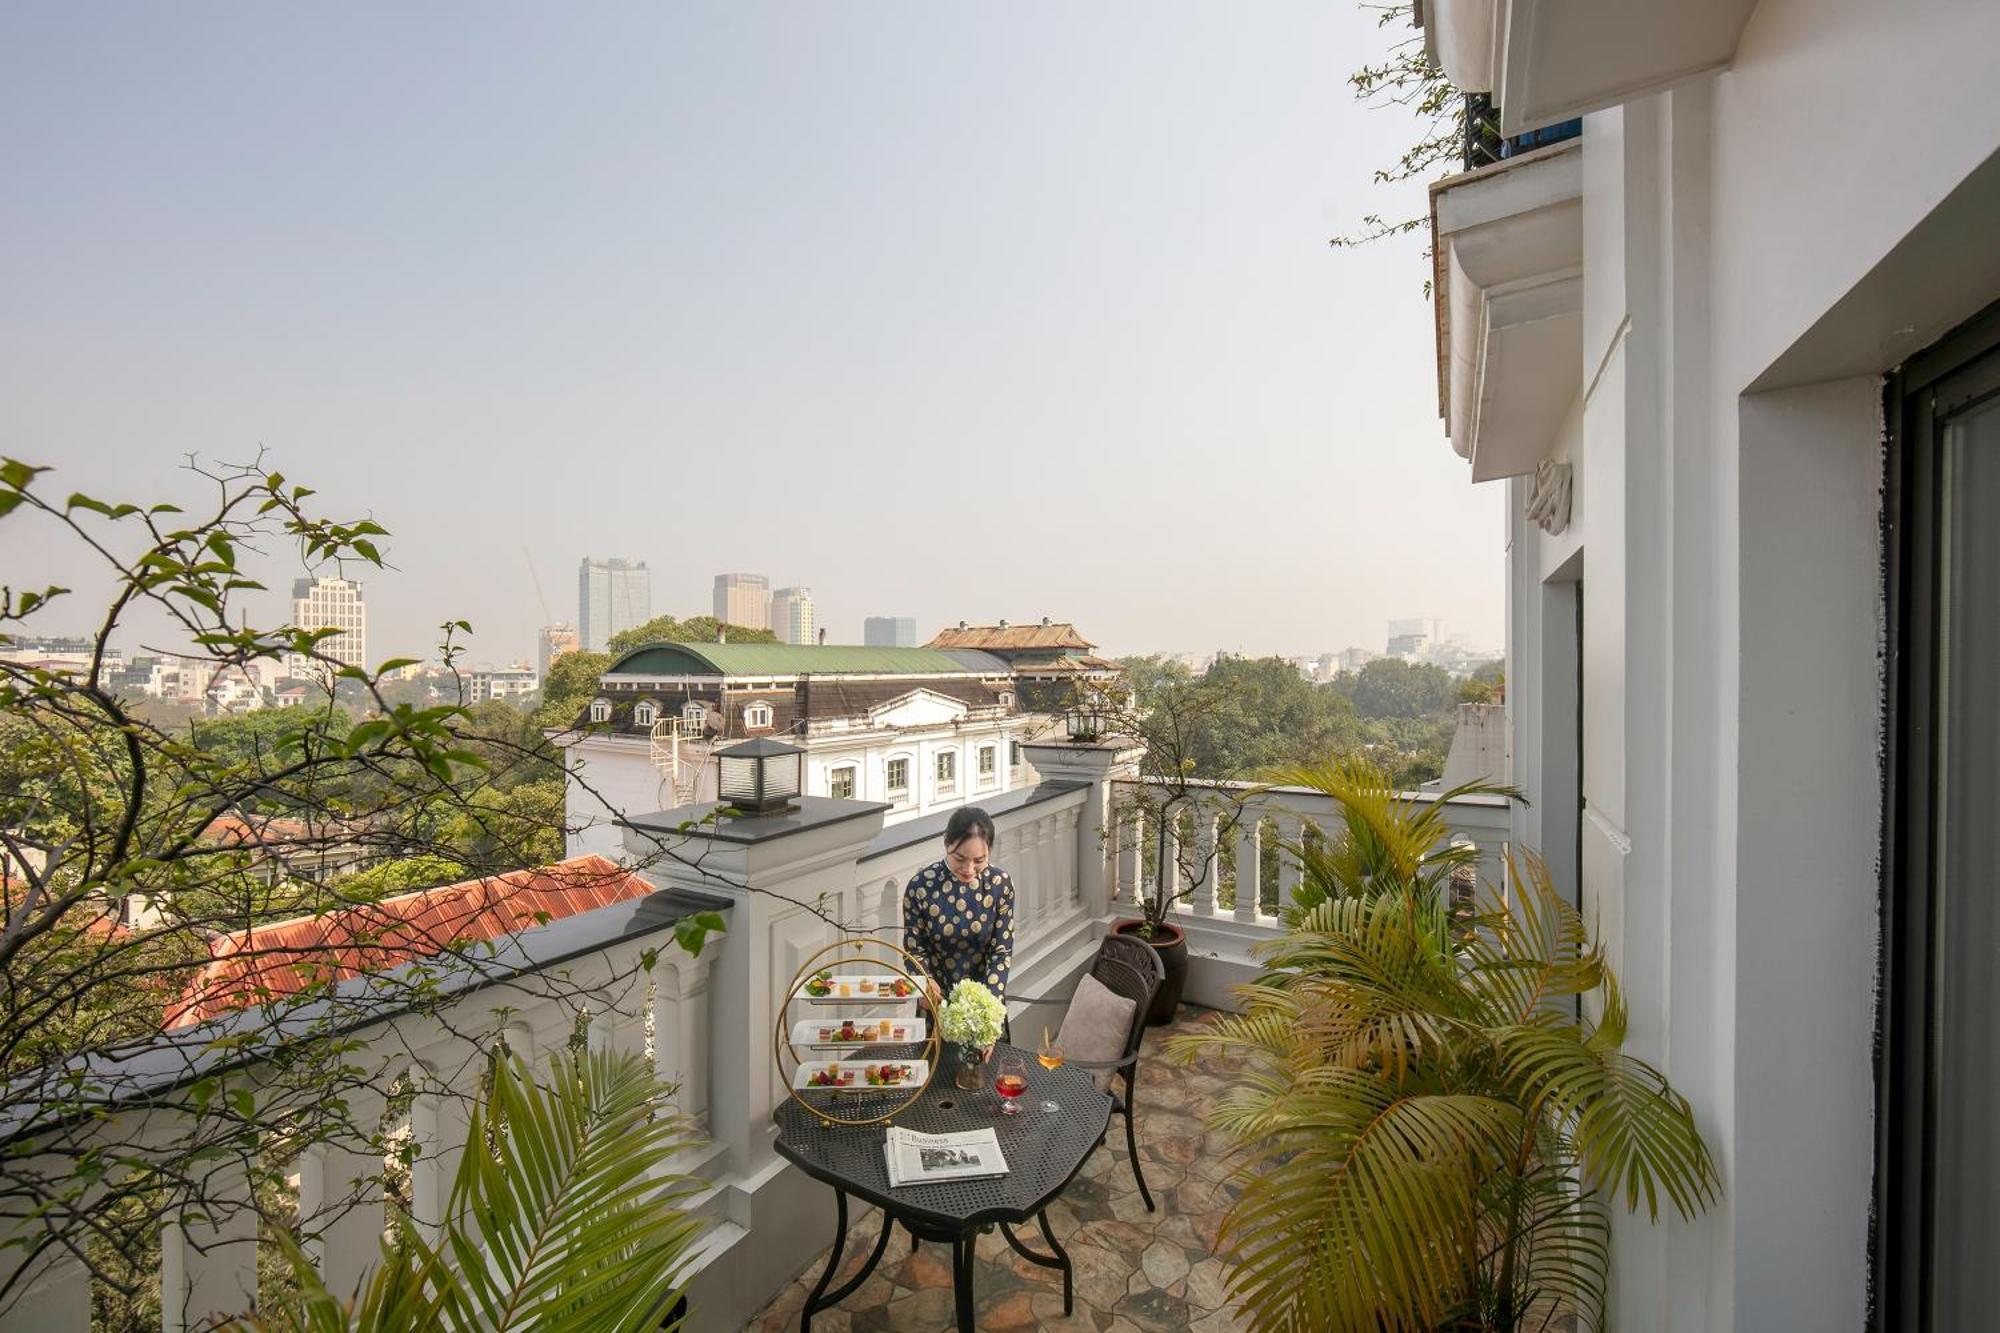 The Oriental Jade Hotel Hanoi Exterior foto